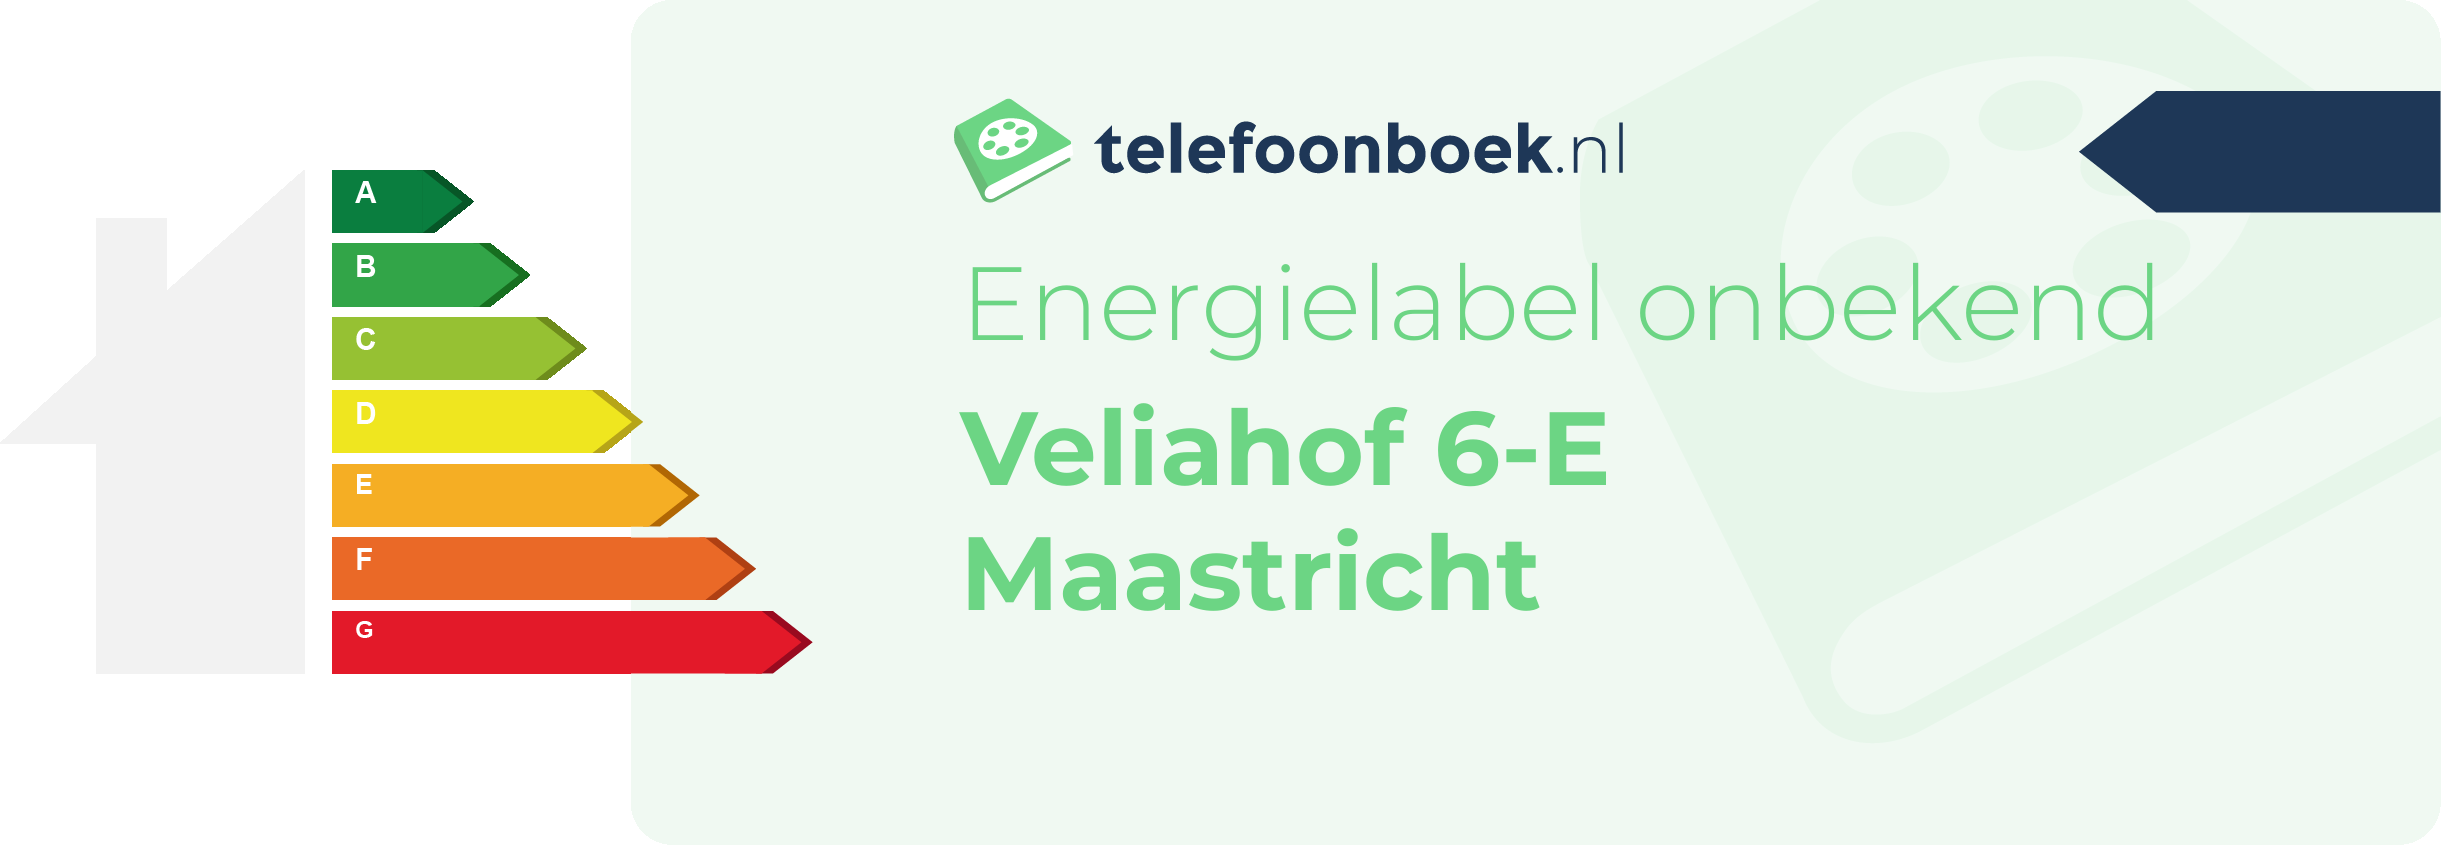 Energielabel Veliahof 6-E Maastricht